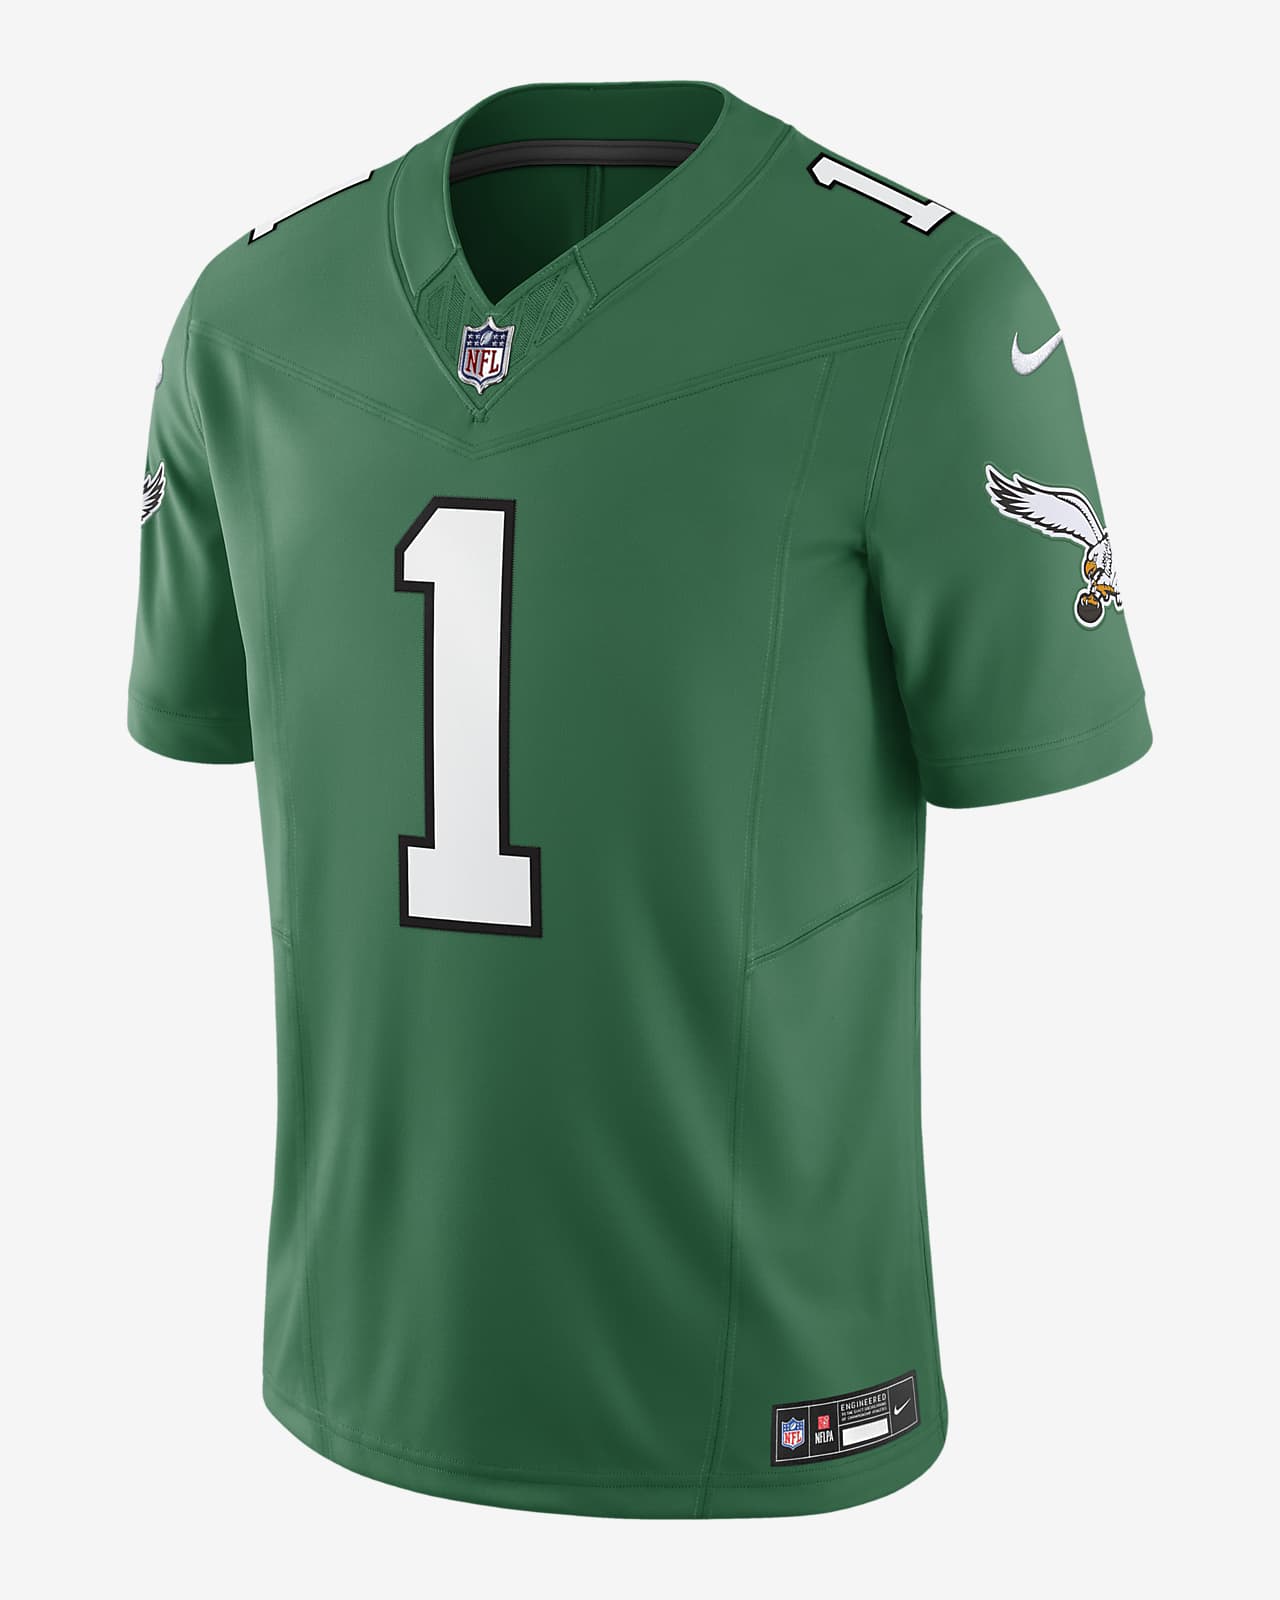 Jersey de fútbol americano Nike Dri-FIT de la NFL Limited para hombre Jalen Hurts Philadelphia Eagles